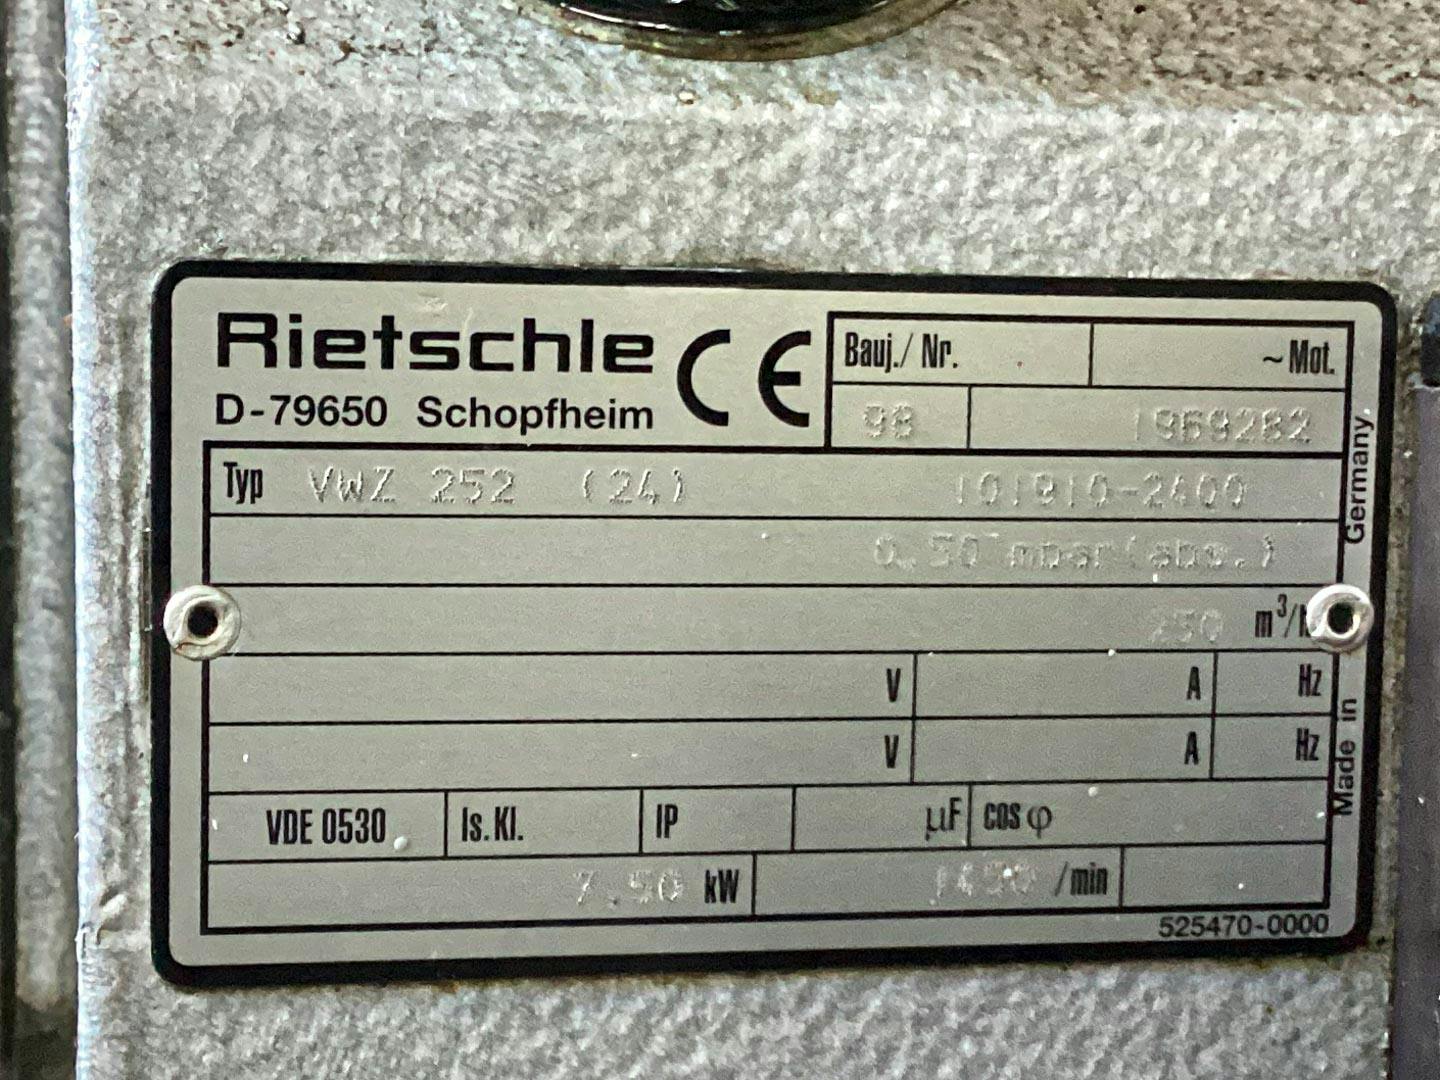 Rietschle VWZ 252 (24) - Pompa a vuoto - image 7